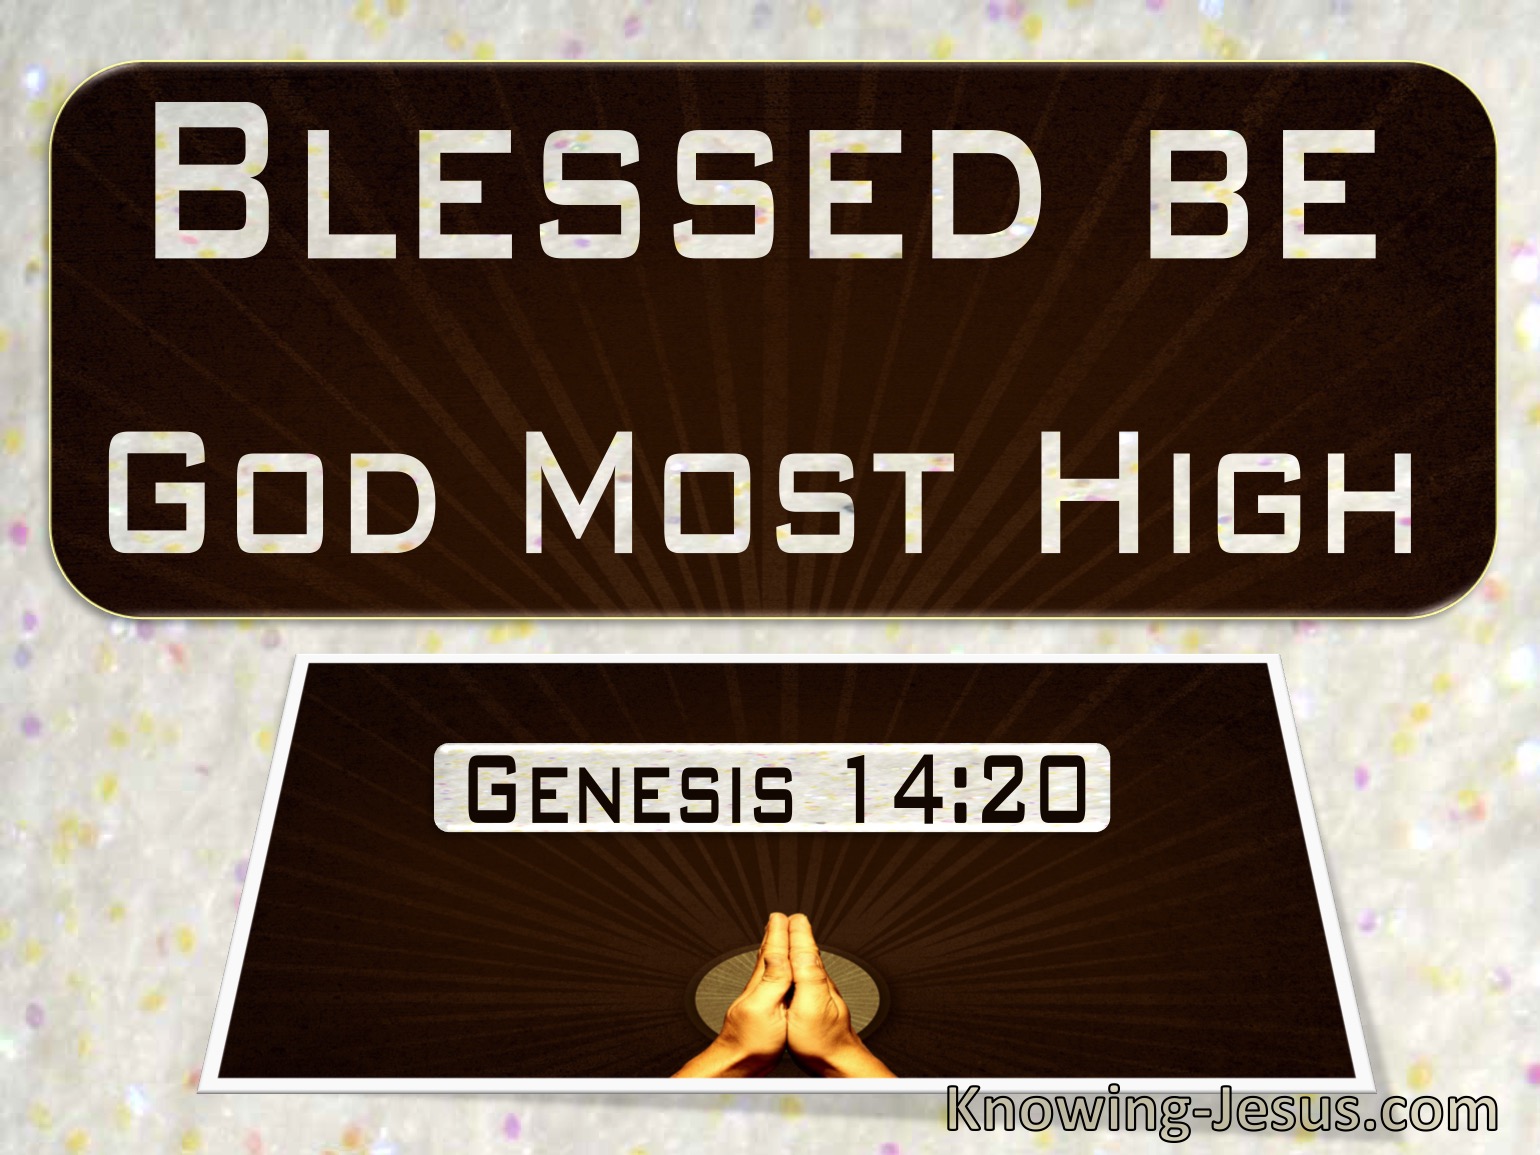 What Does Genesis 14:20 Mean?